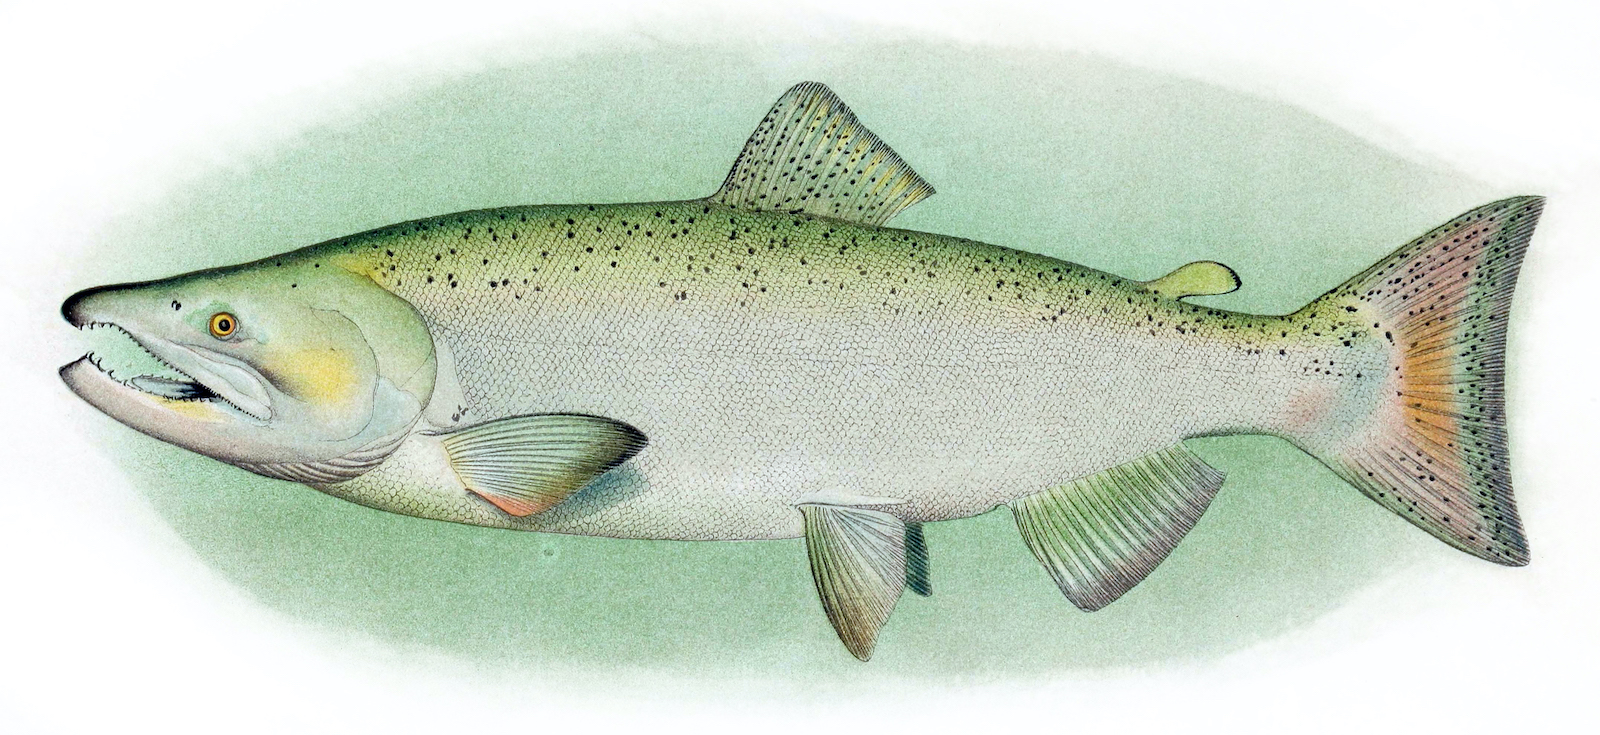 The Chinook salmon (Oncorhynchus tshawytscha). Photo: Wikimedia